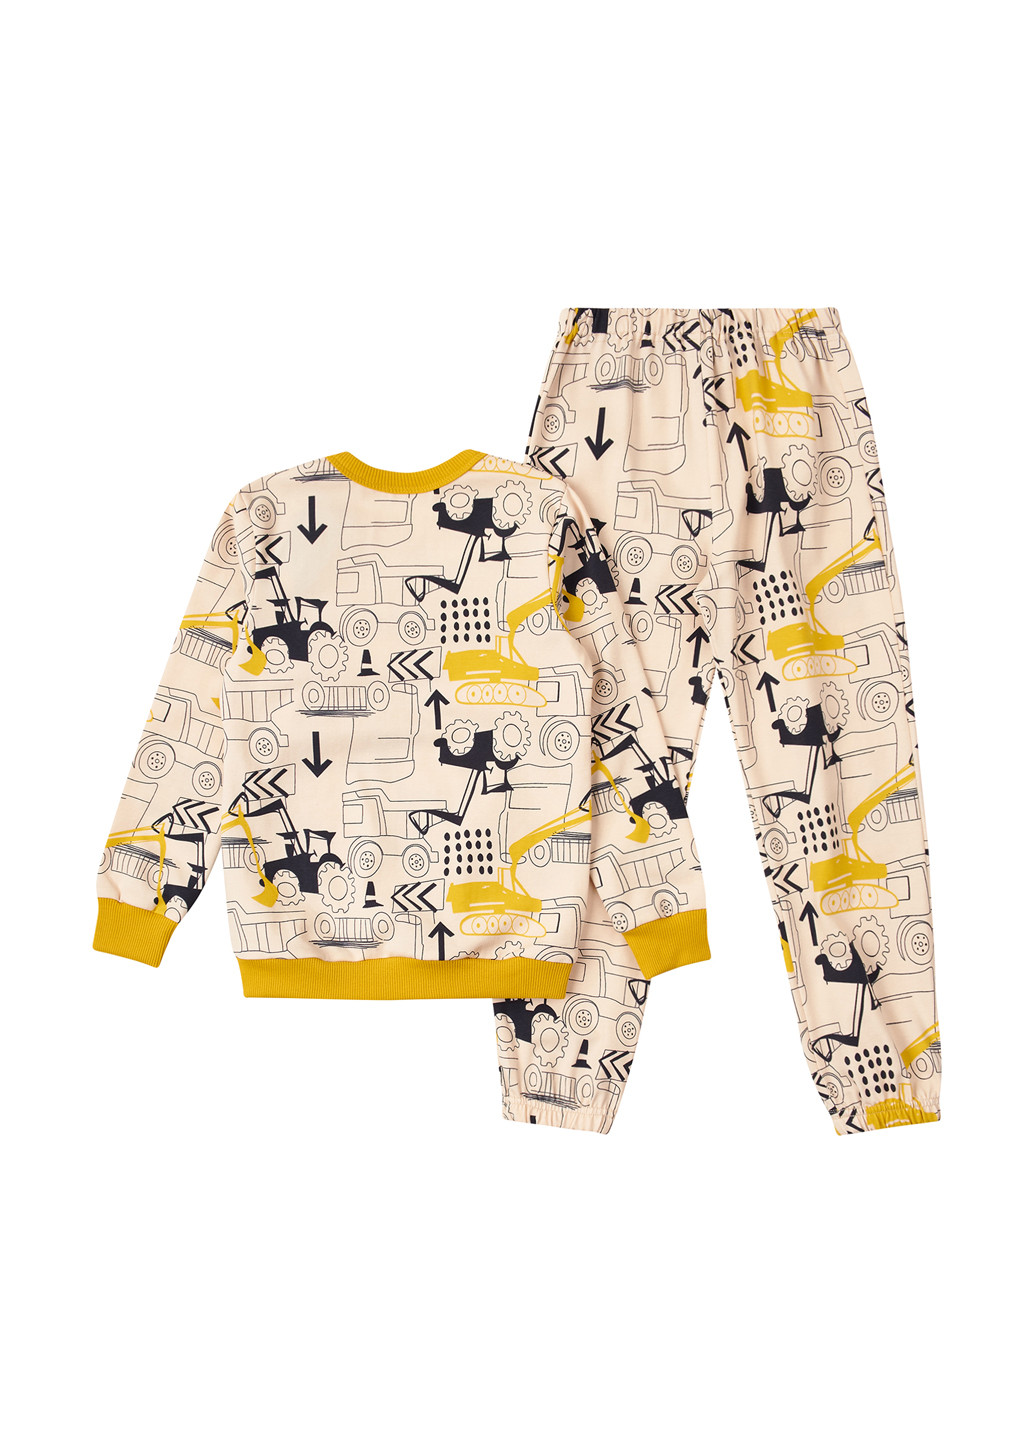 Молочная всесезон пижама (свитшот, брюки) свитшот + брюки Ляля